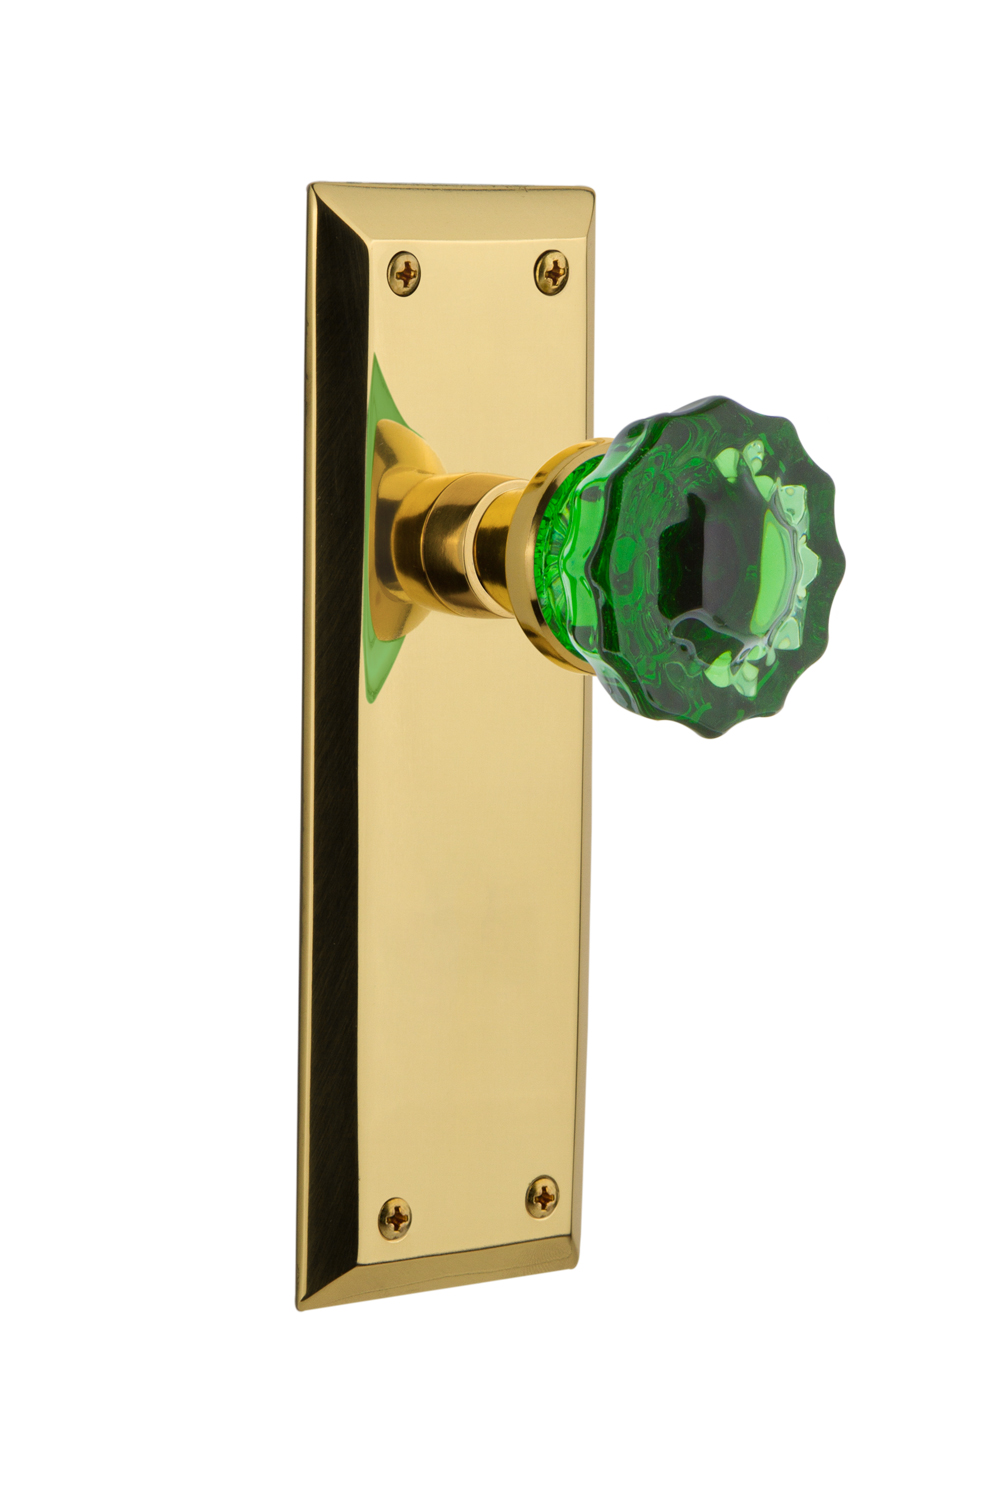 Nostalgic Warehouse 723446 New York Plate Double Dummy Crystal Emerald Glass Door Knob in Unlaquered Brass 